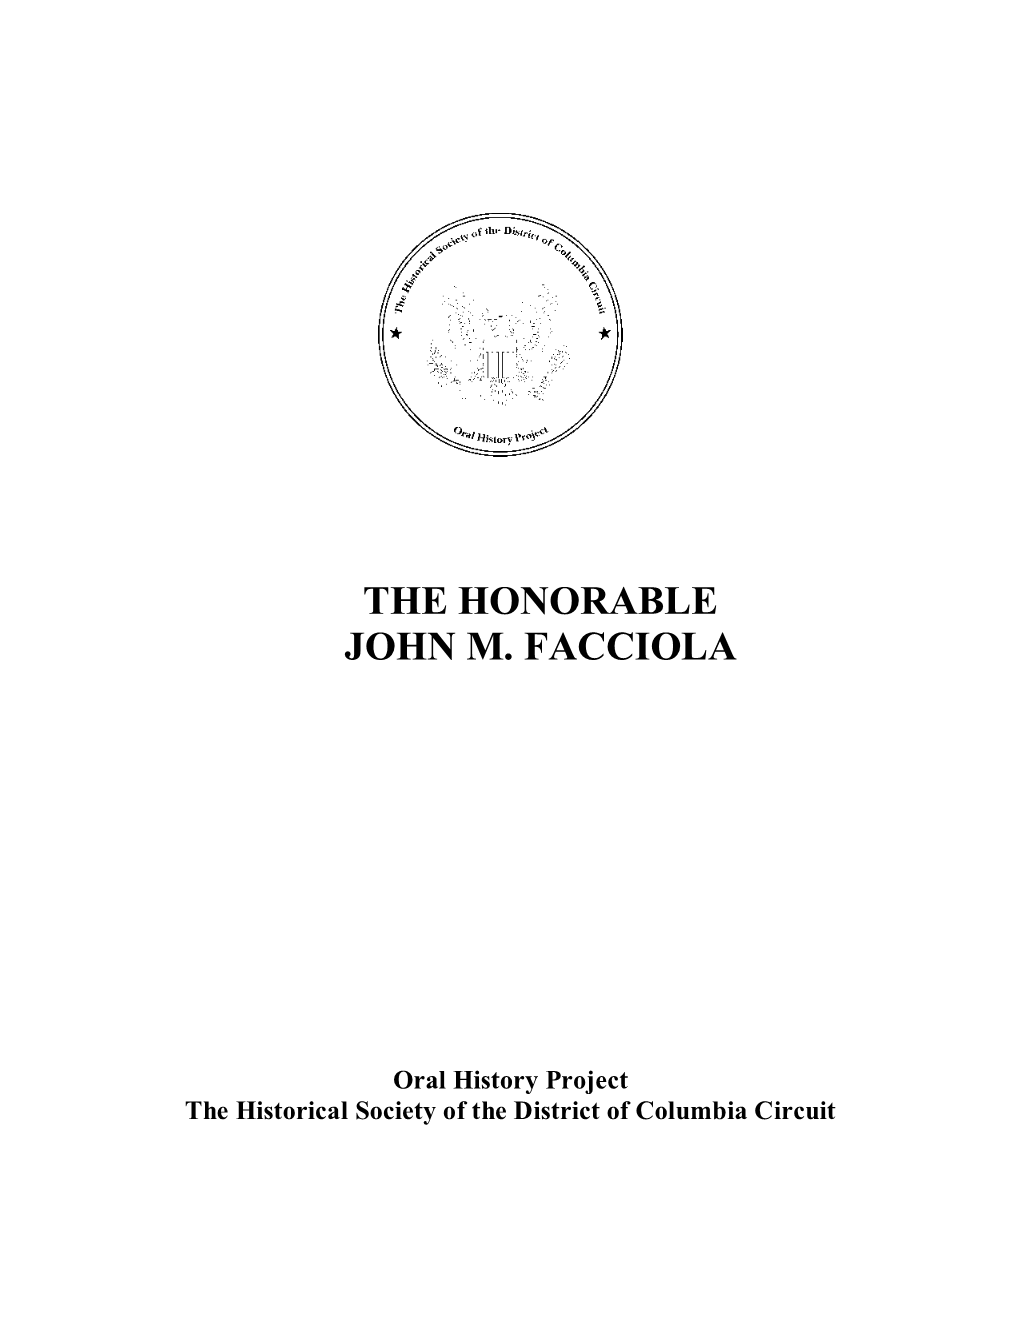 The Honorable John M. Facciola